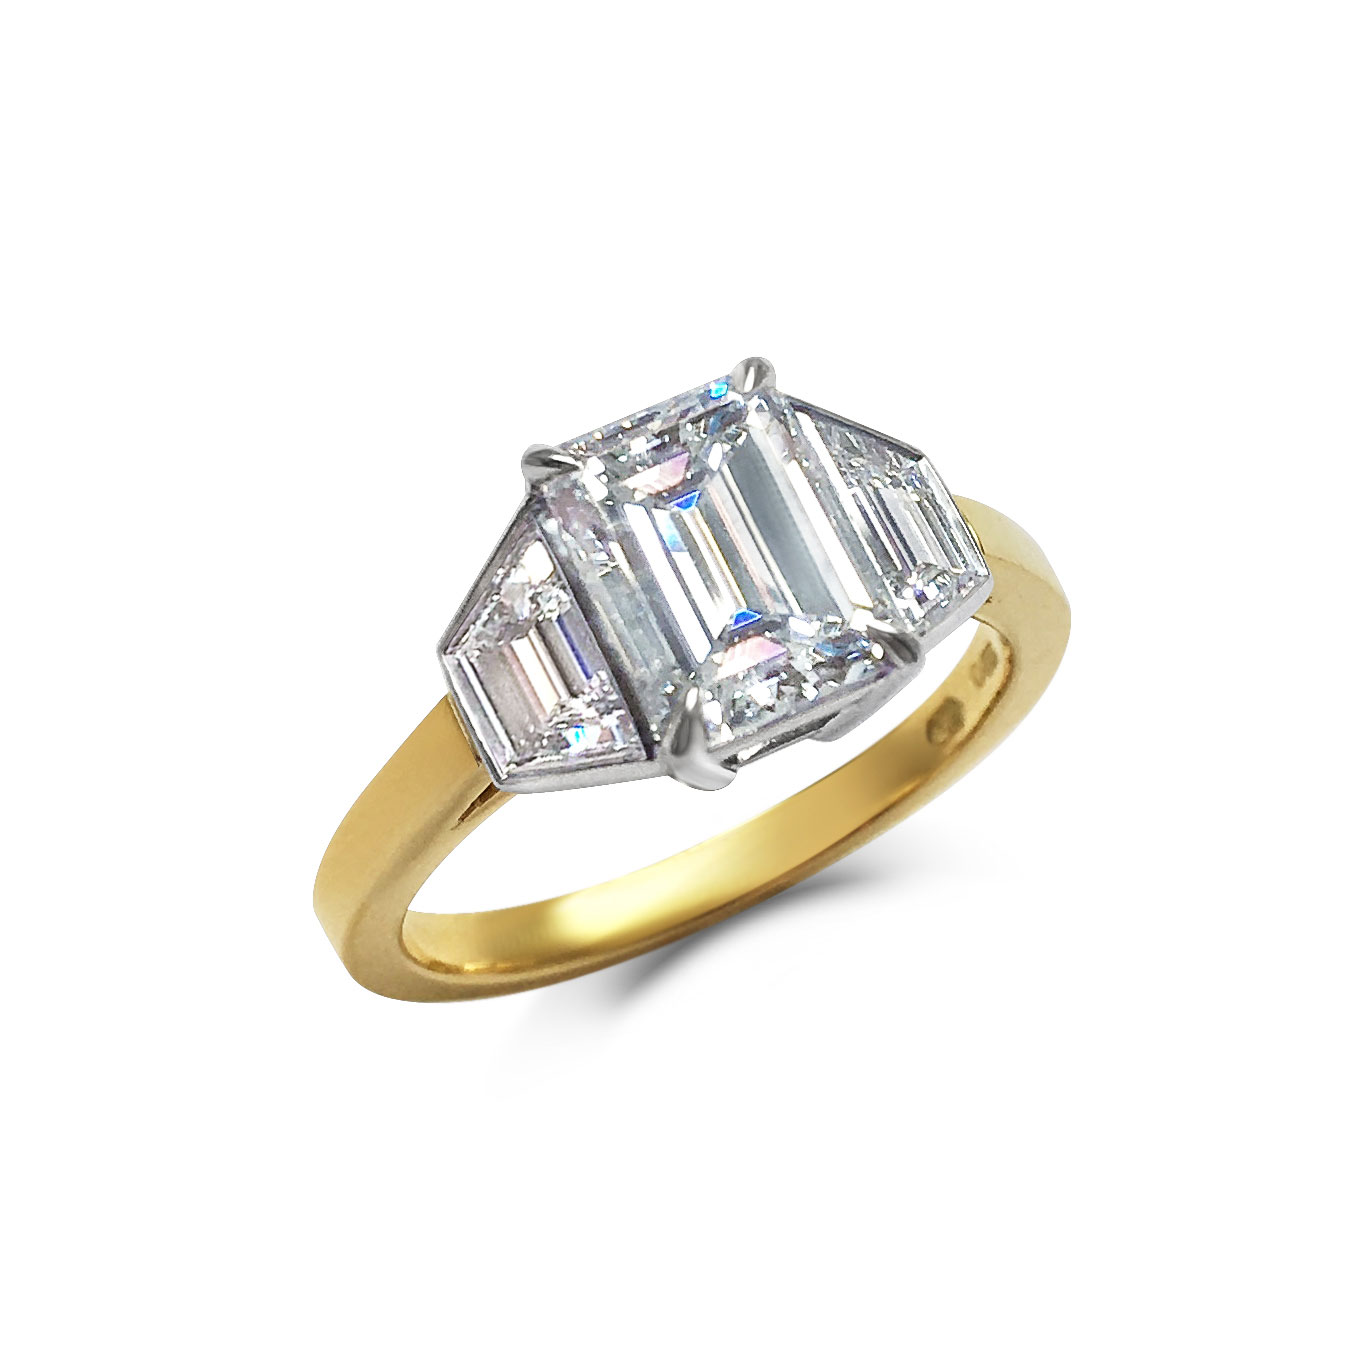 Emerald-cut diamond ring